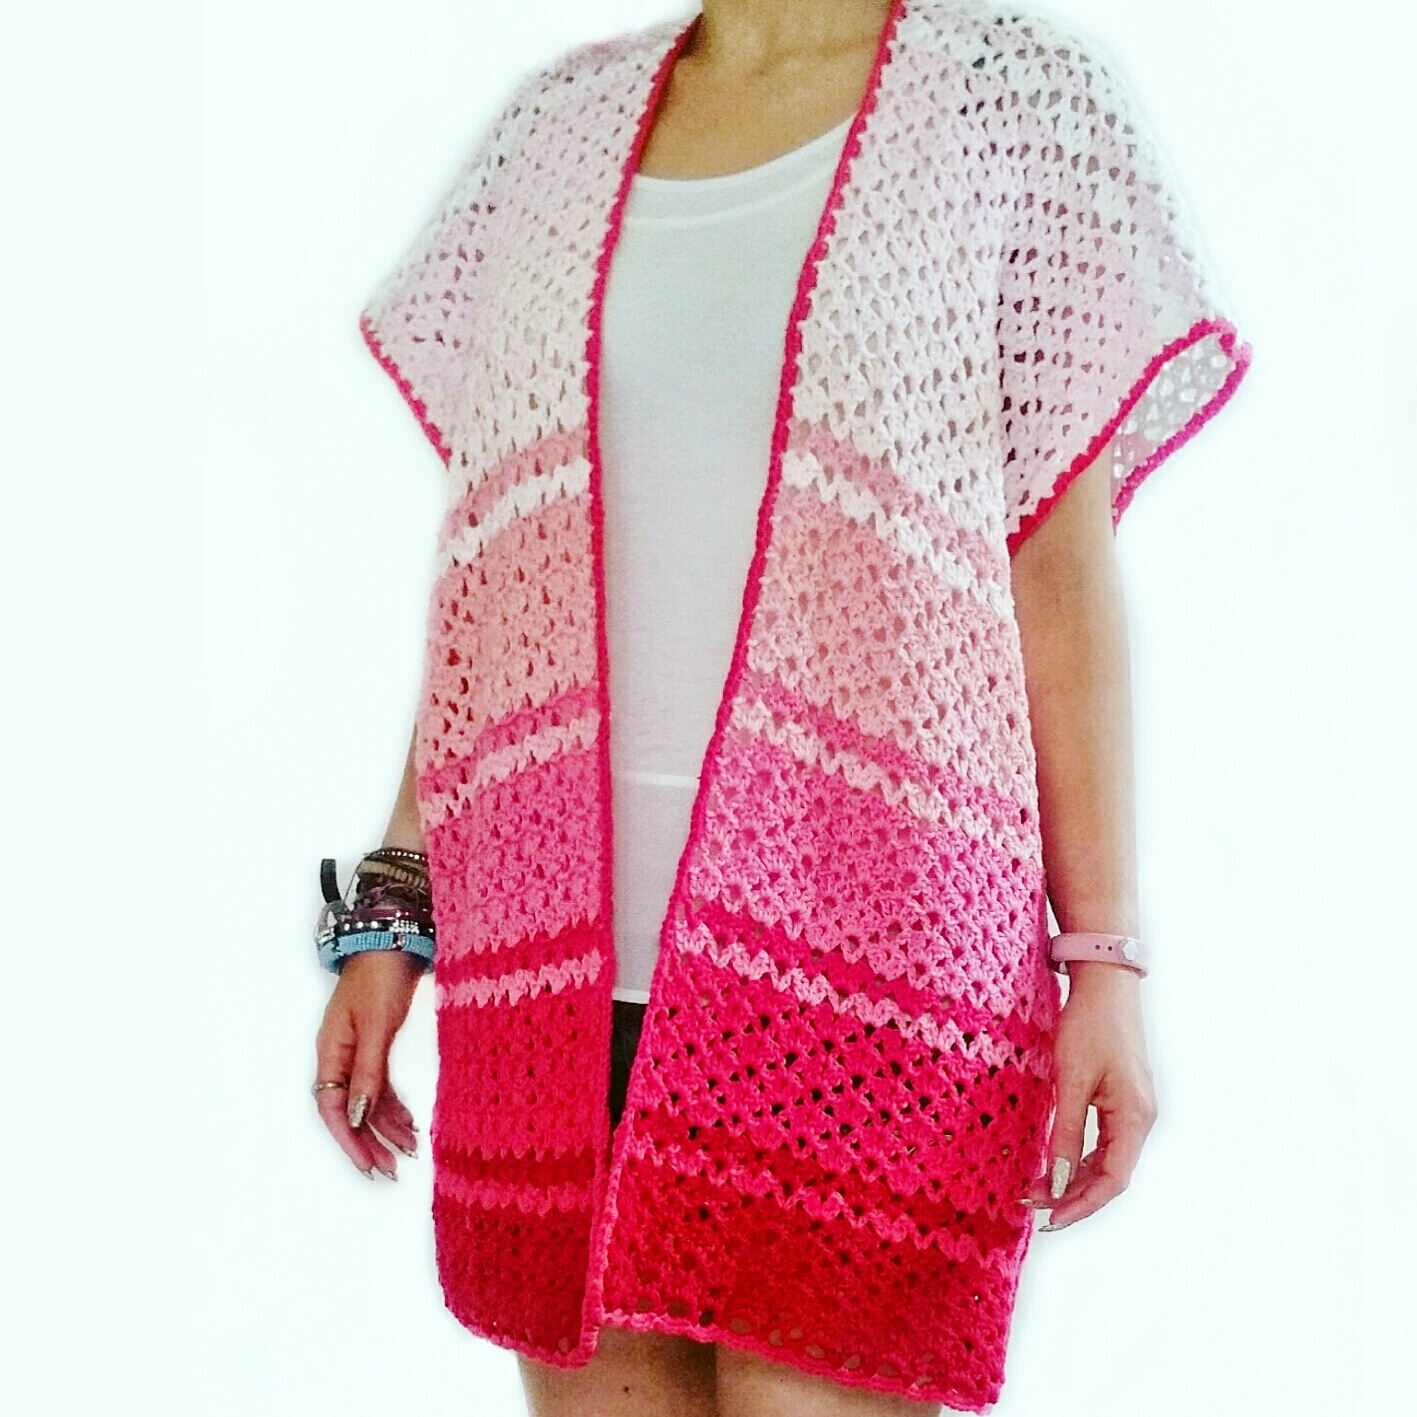 Kimono Crochet Pattern Set Free My Gypsy Soul A Crochet Craft Blog Pink Ombre Kimono